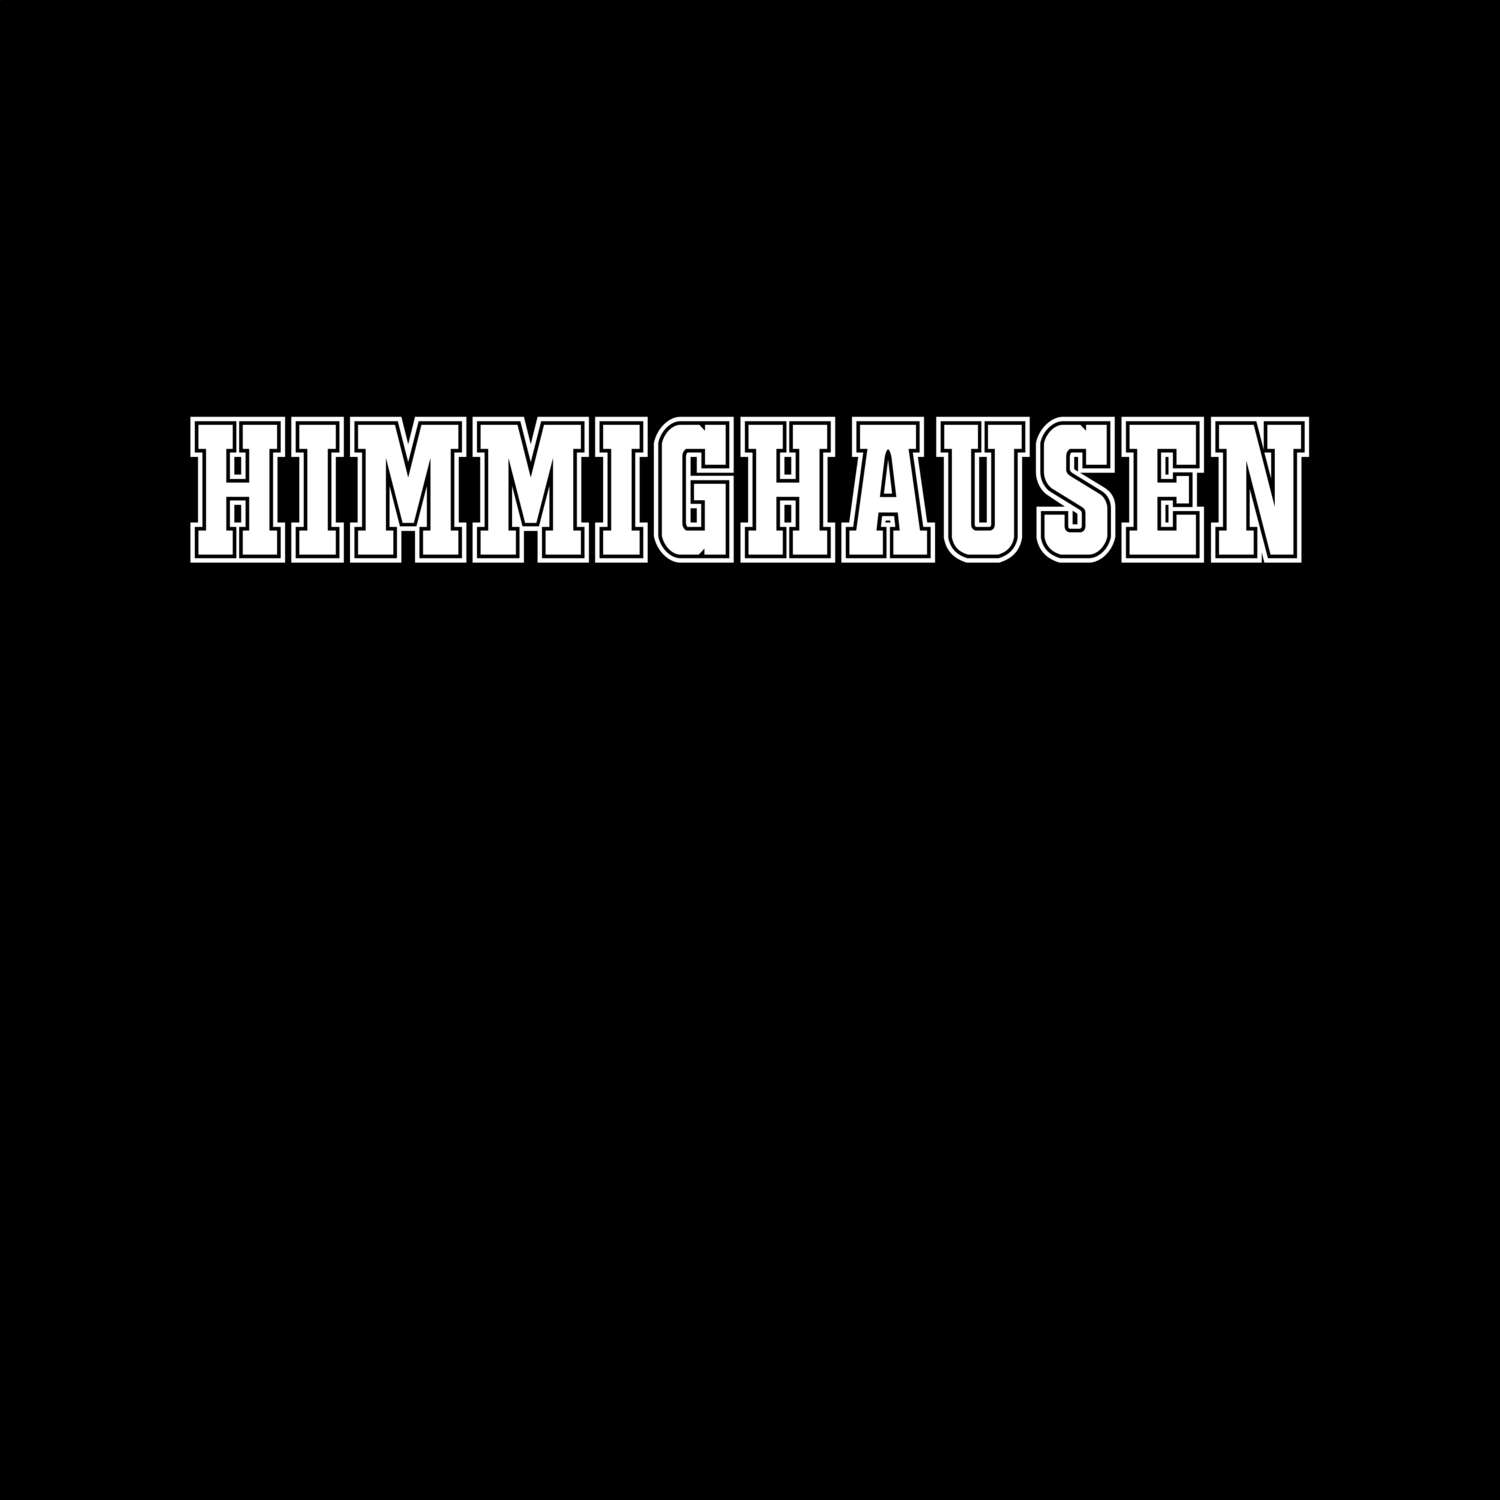 Himmighausen T-Shirt »Classic«